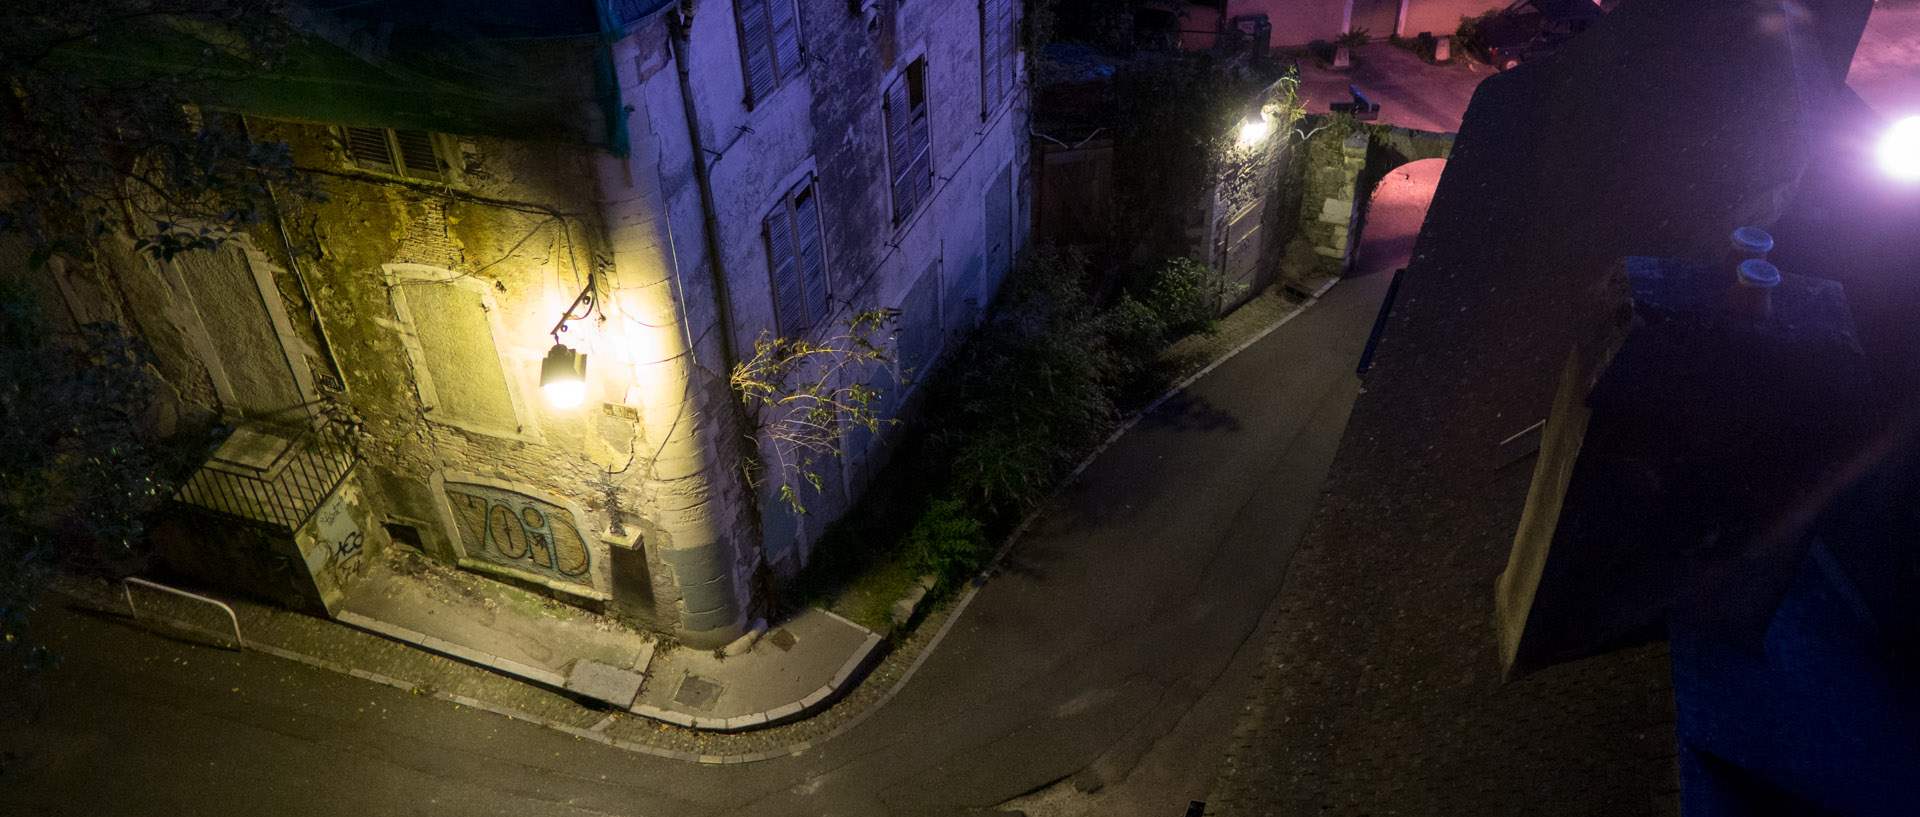 Petite rue, la nuit, à Pau.